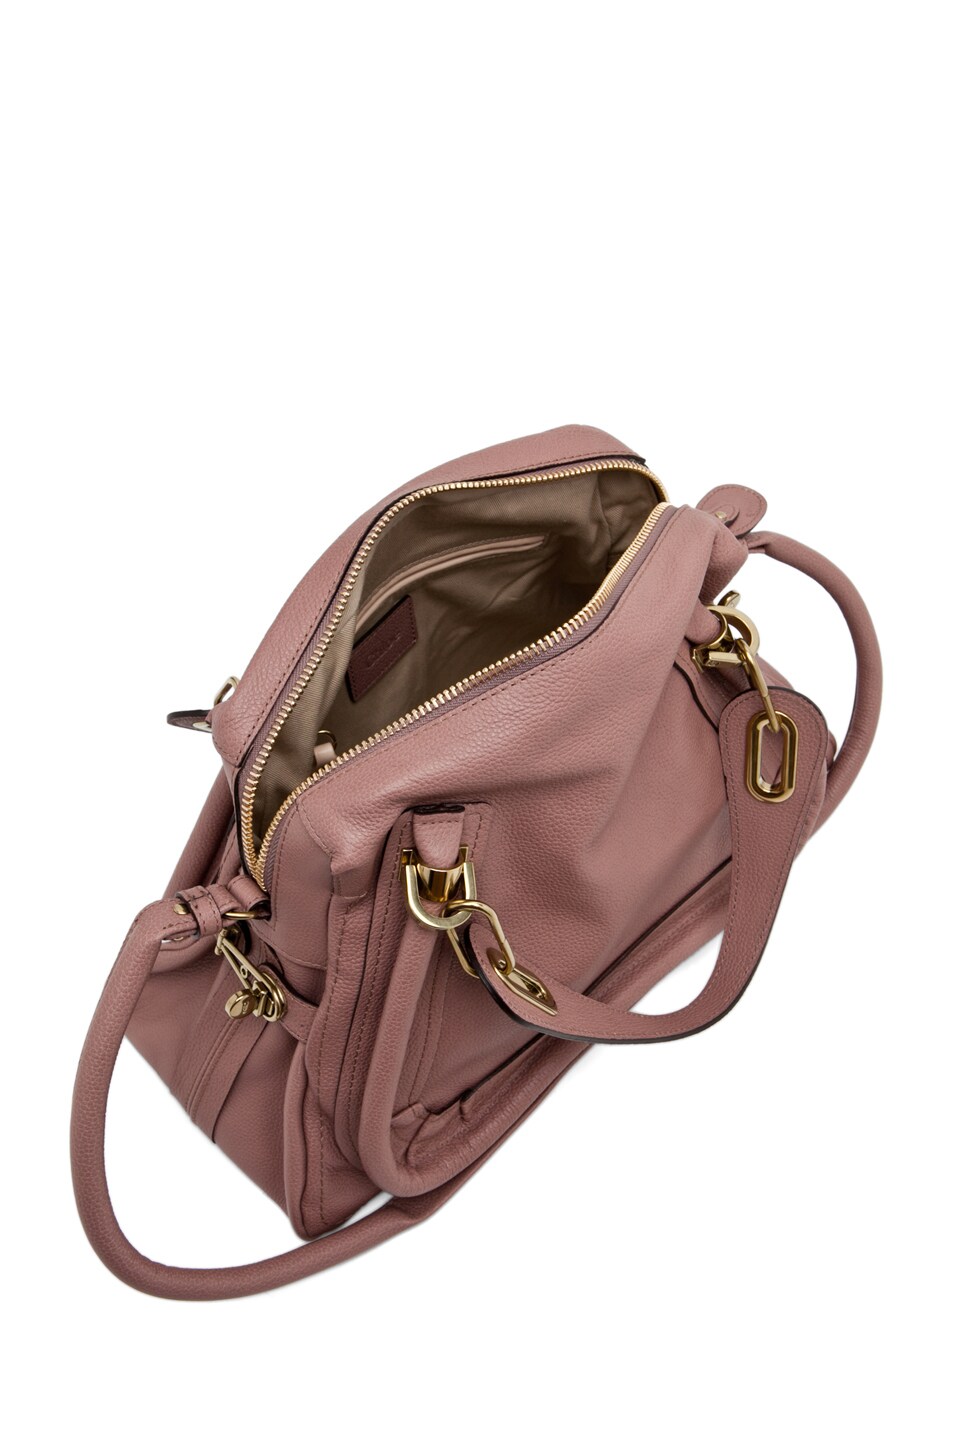 Chloe Paraty Medium Handbag with Strap in Desert Mauve | FWRD  